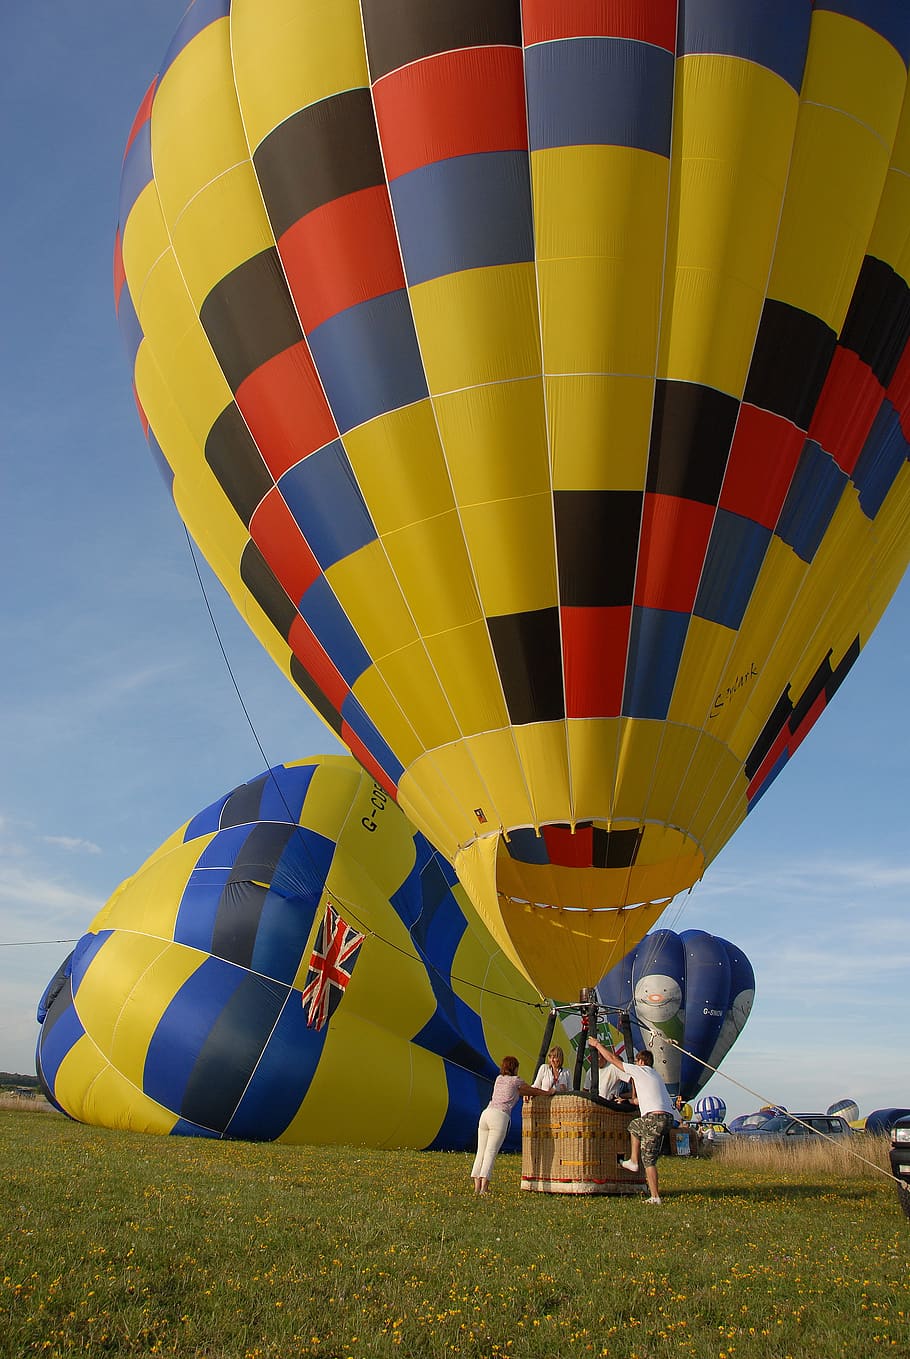 balon udara panas, bola, penerbangan, udara, warna, beraneka warna, papan main dam, kuning, merah, biru